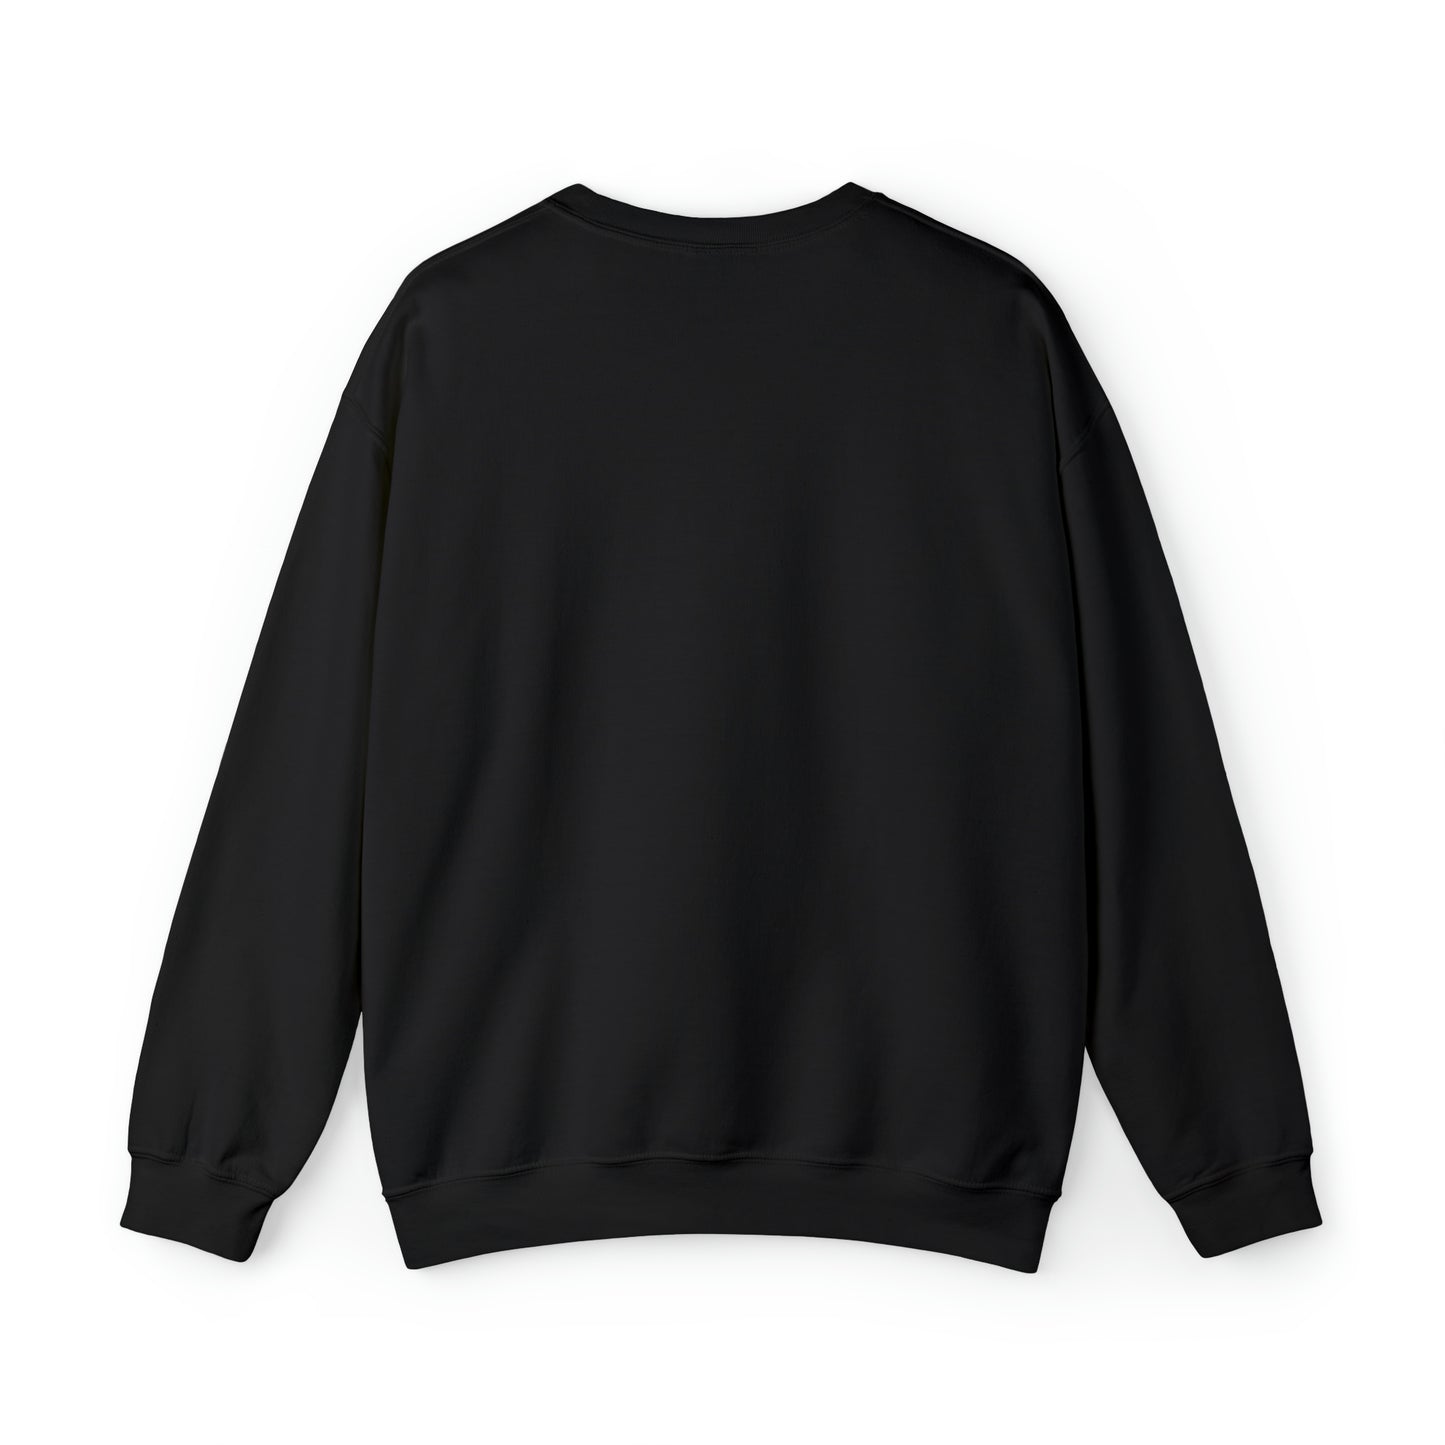 Unisex Heavy Blend™ Crewneck Sweatshirt Rock Santa Christmas gift, ugly sweater